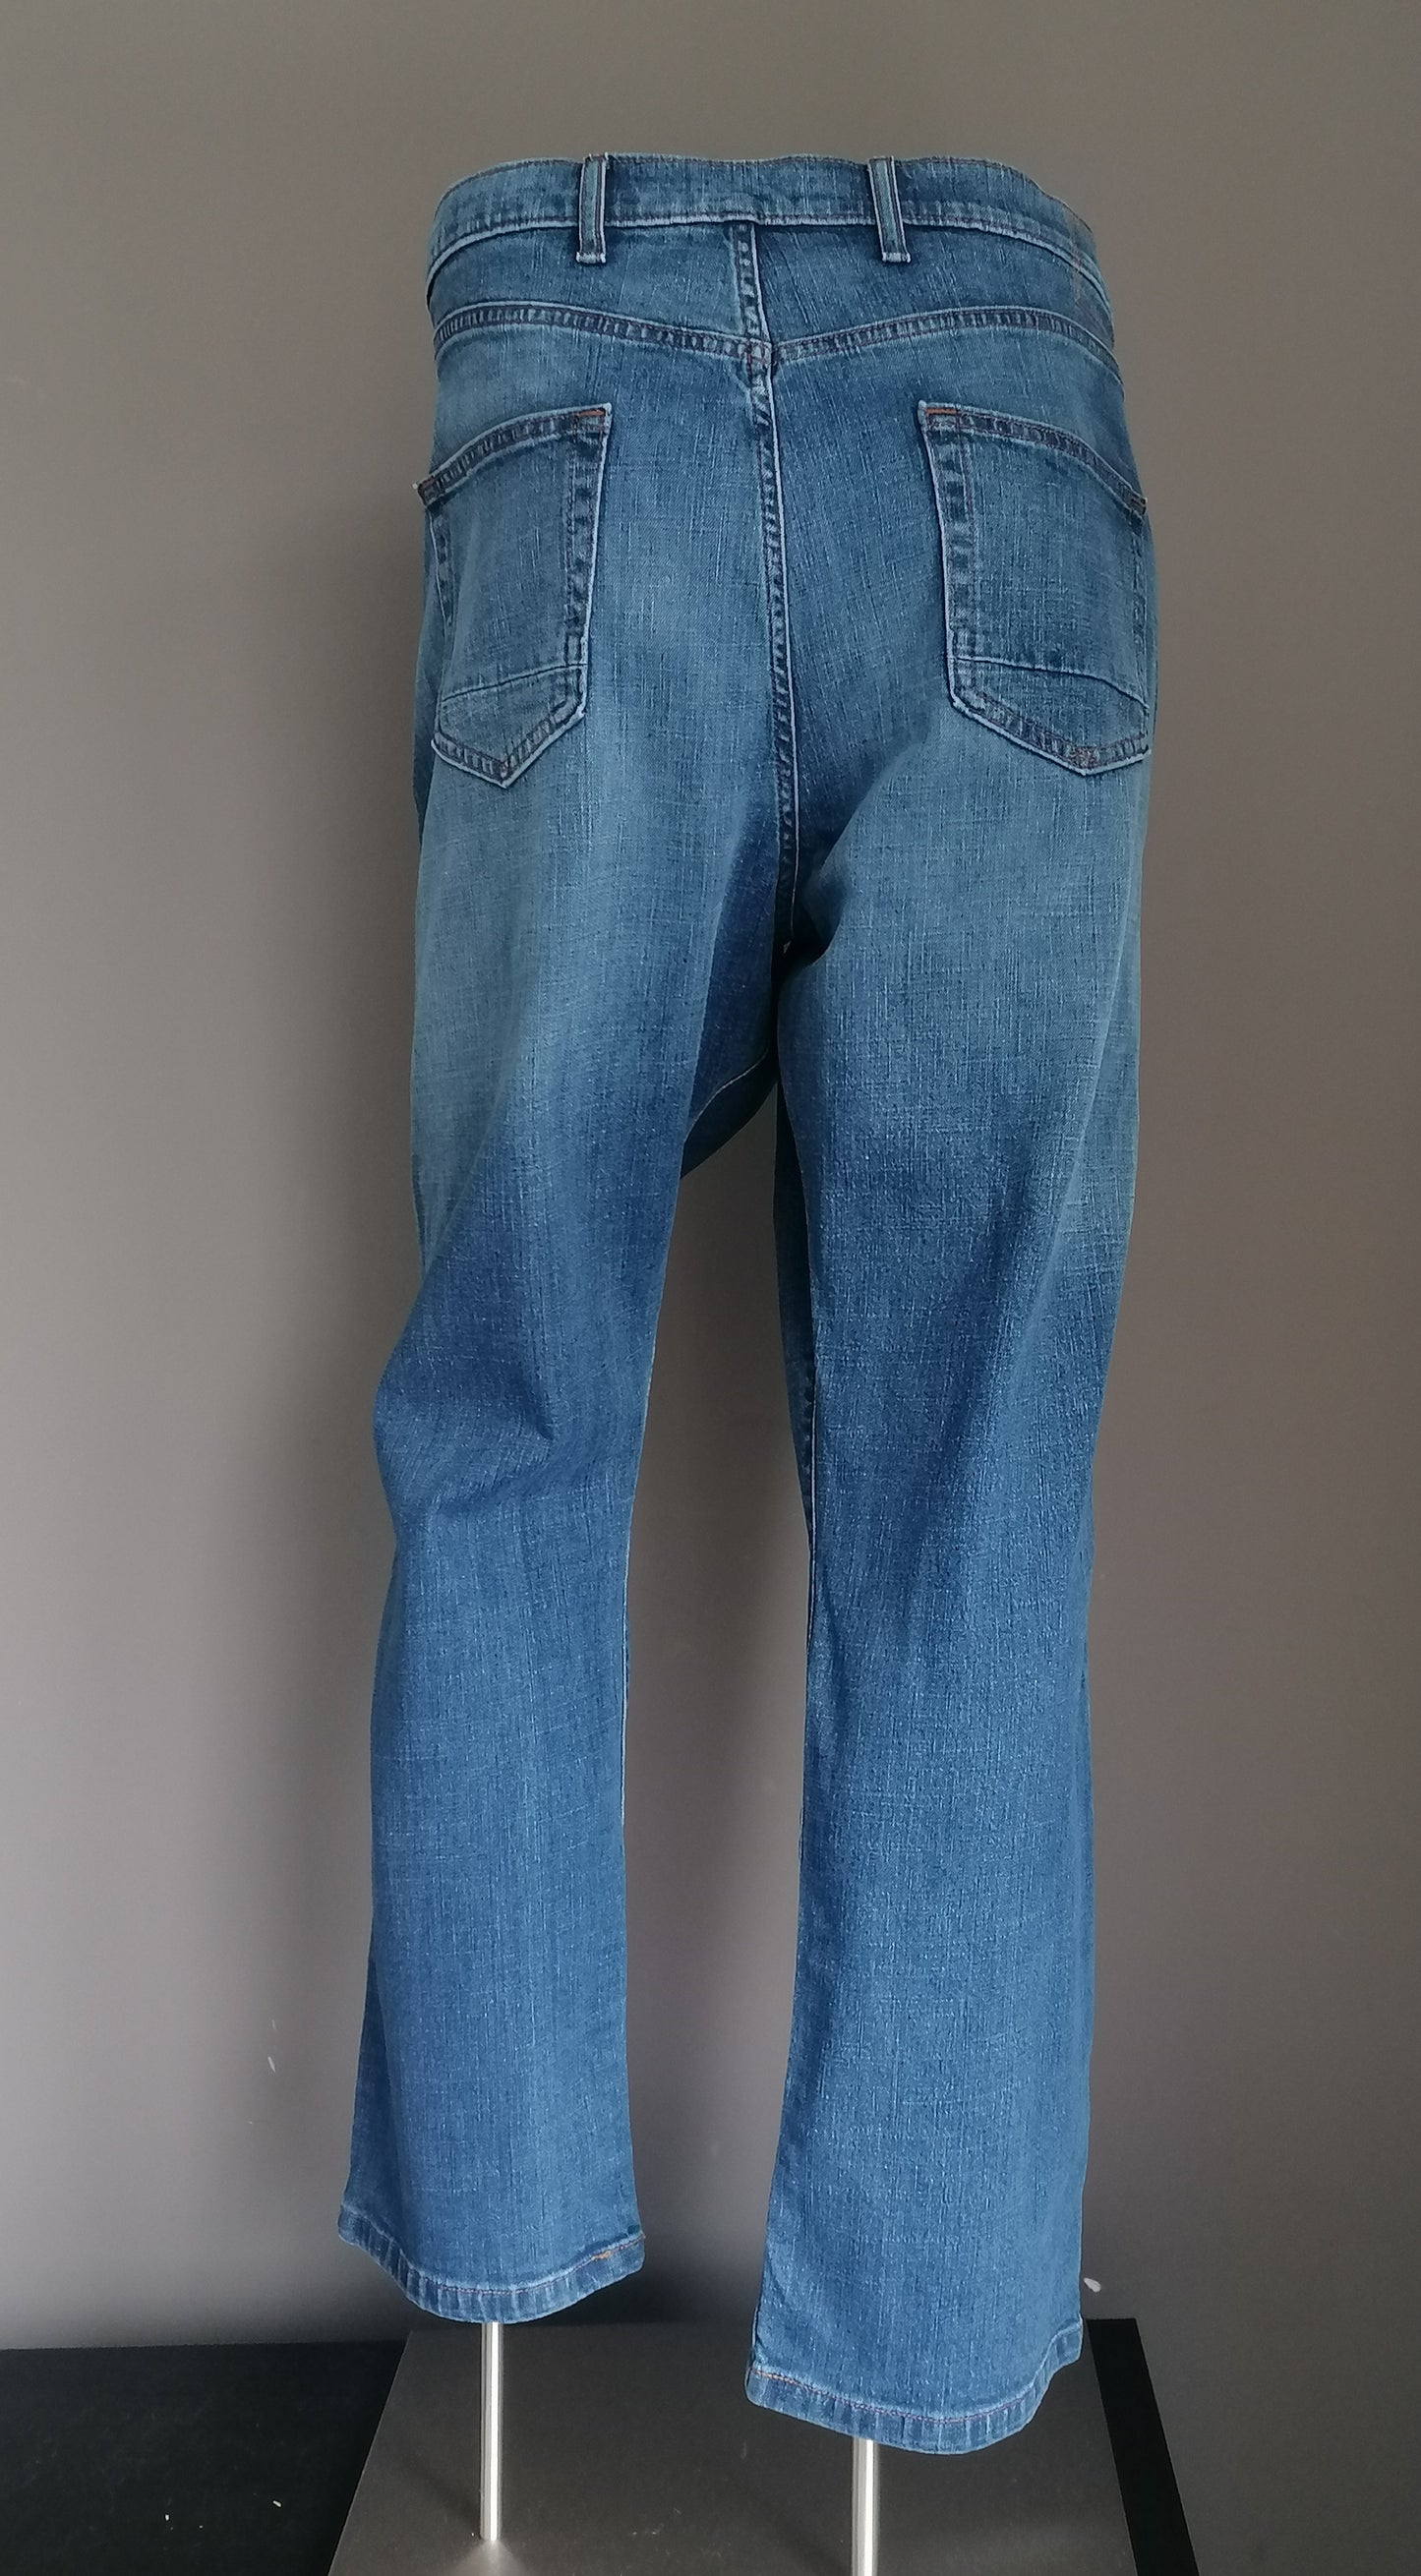 M&S (Marks & Spencer) Jeans. Color azul. Cónico. Tamaño W44 - L30. Estirar.